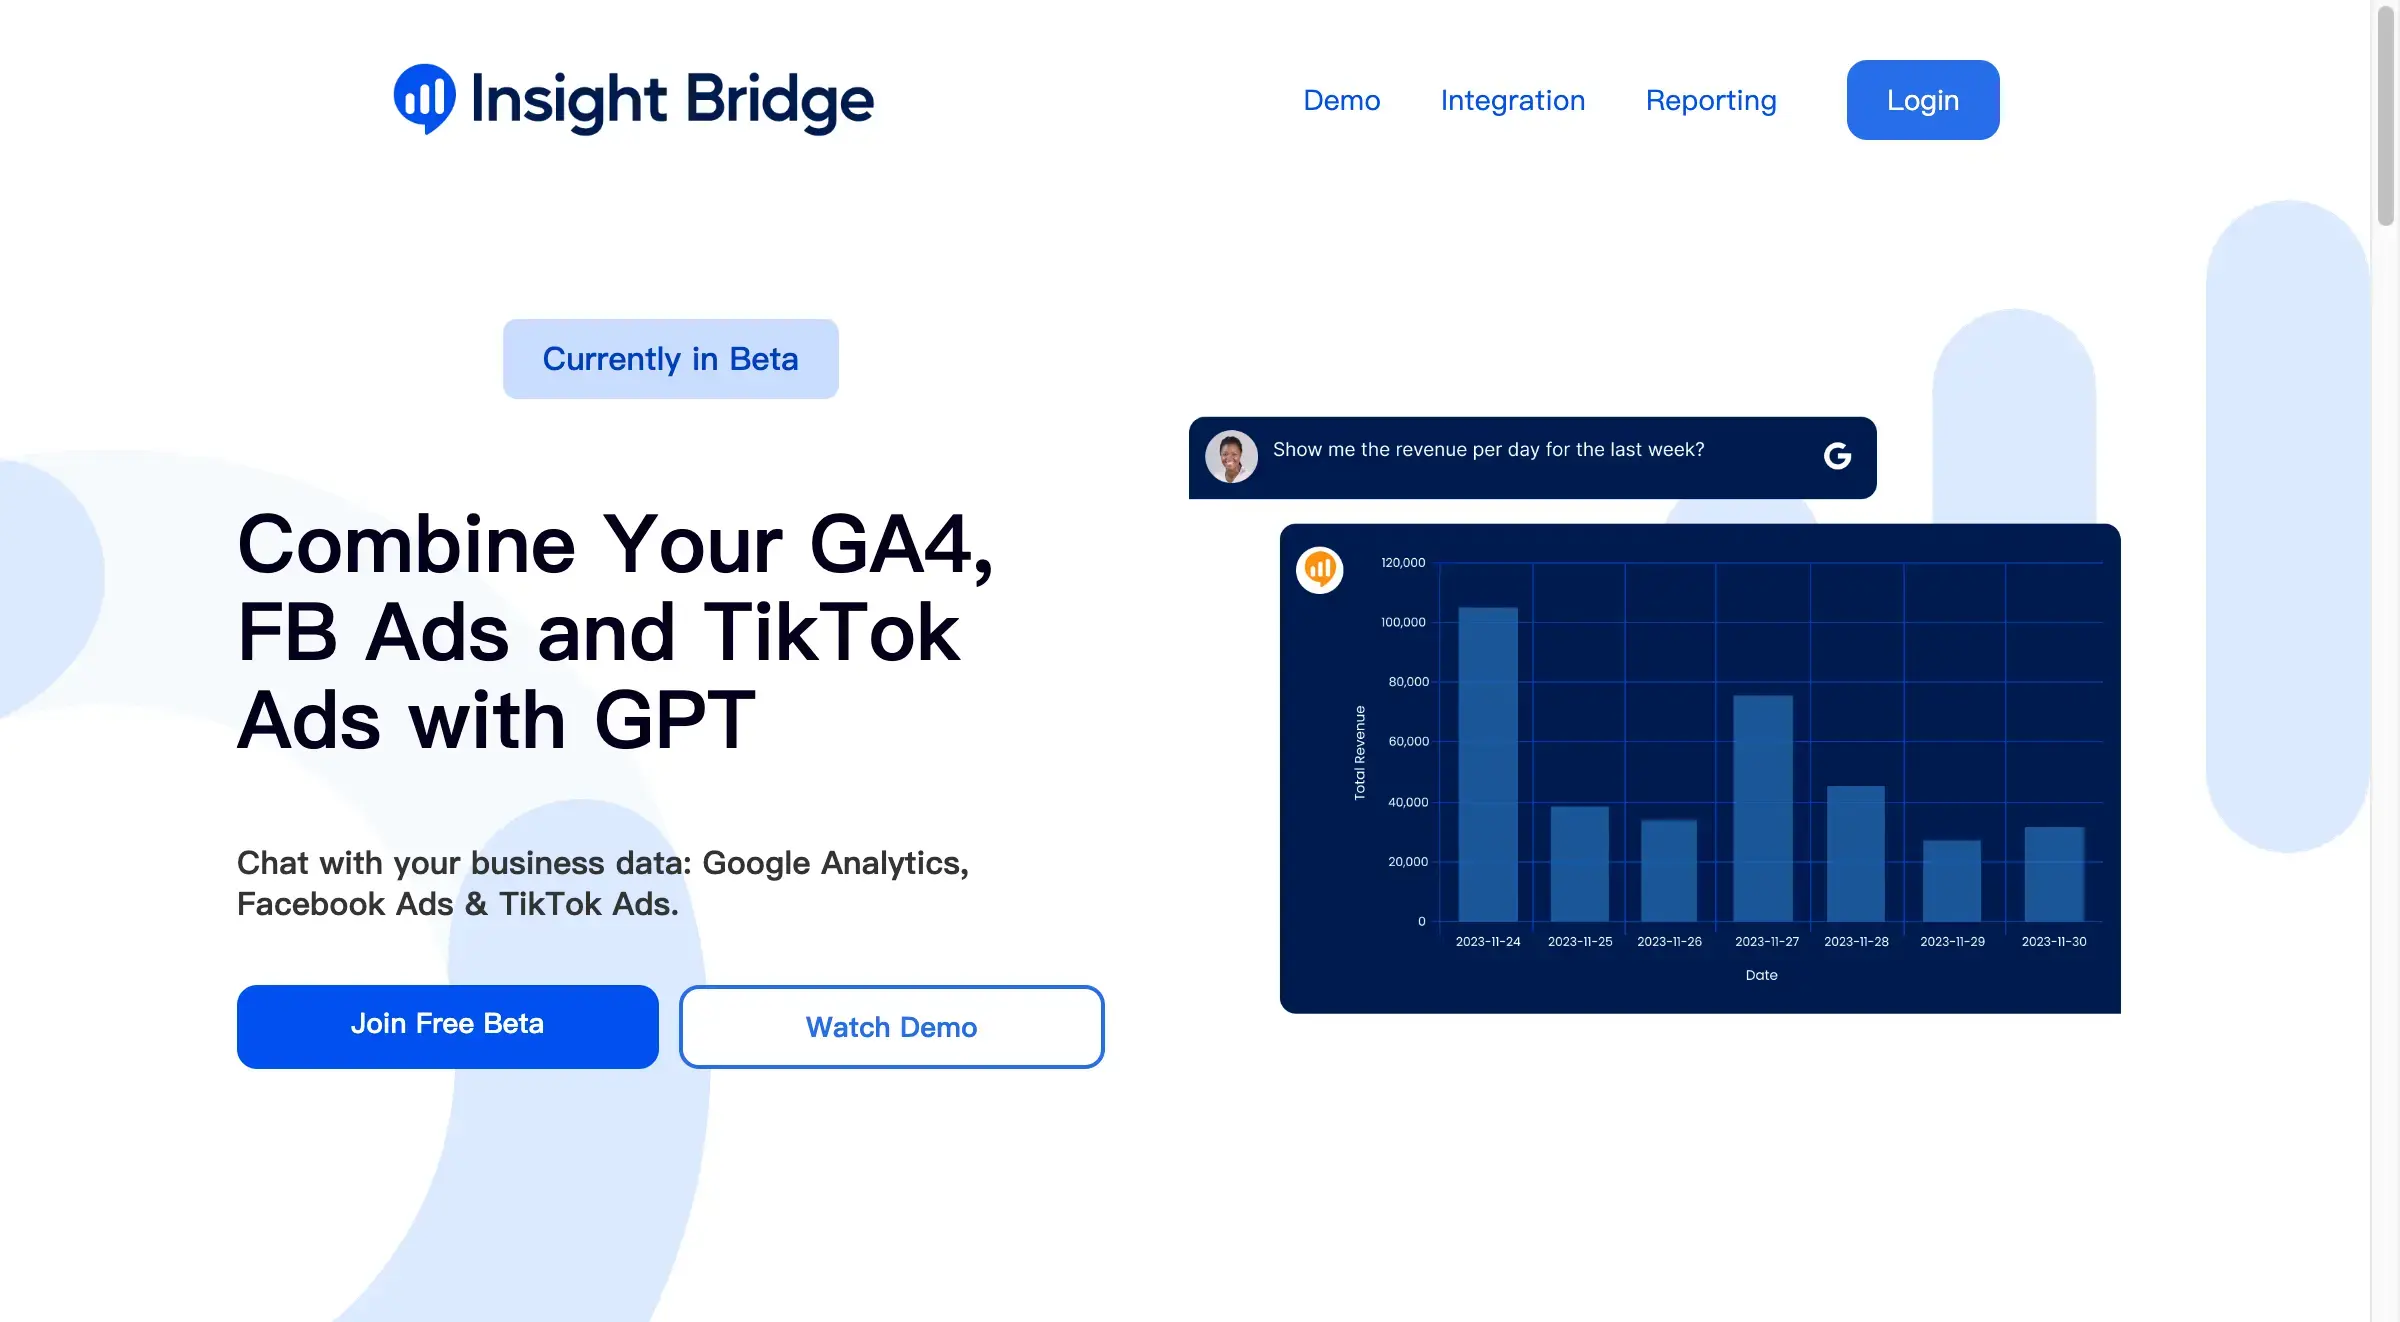 Insight Bridge